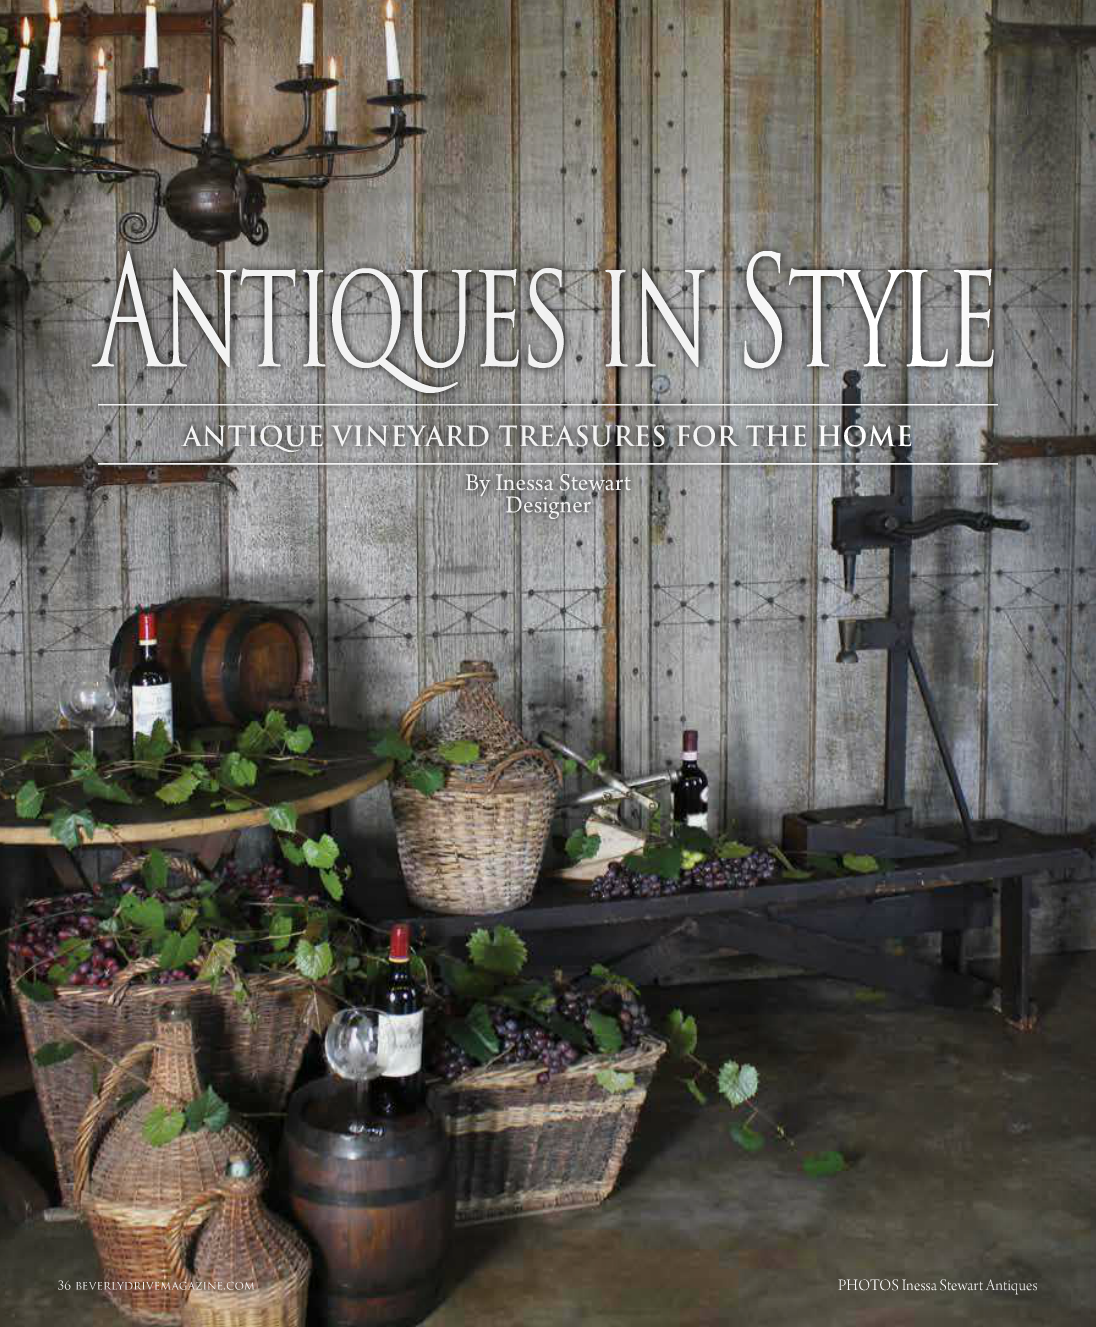 Antique wine accessories and furniture